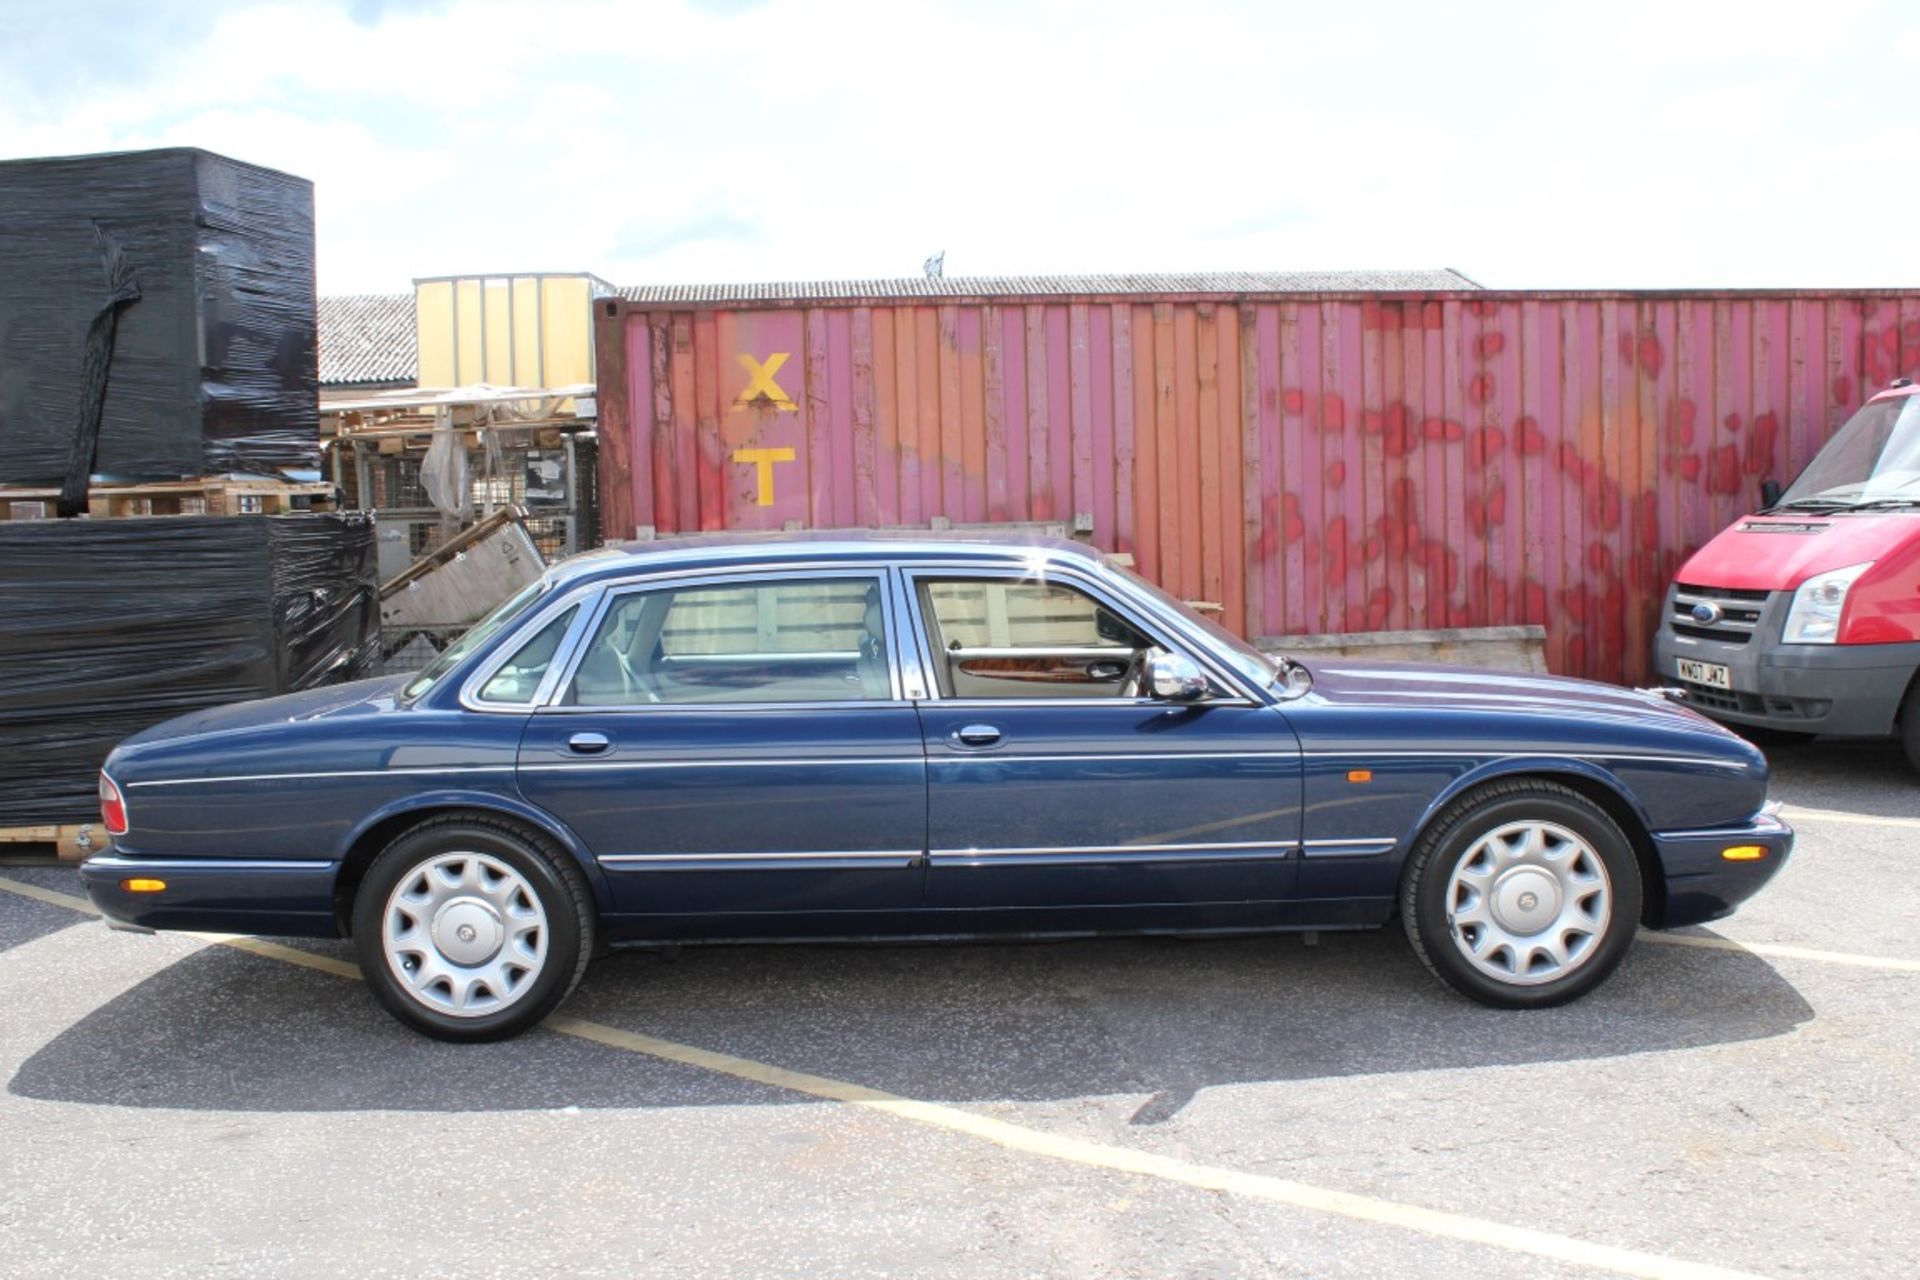 1 x Jaguar Daimler Super V8 Auto 4-Door Saloon - Year 2001 - Blue - Odometer Reading 122,520 - MOT - Image 54 of 77